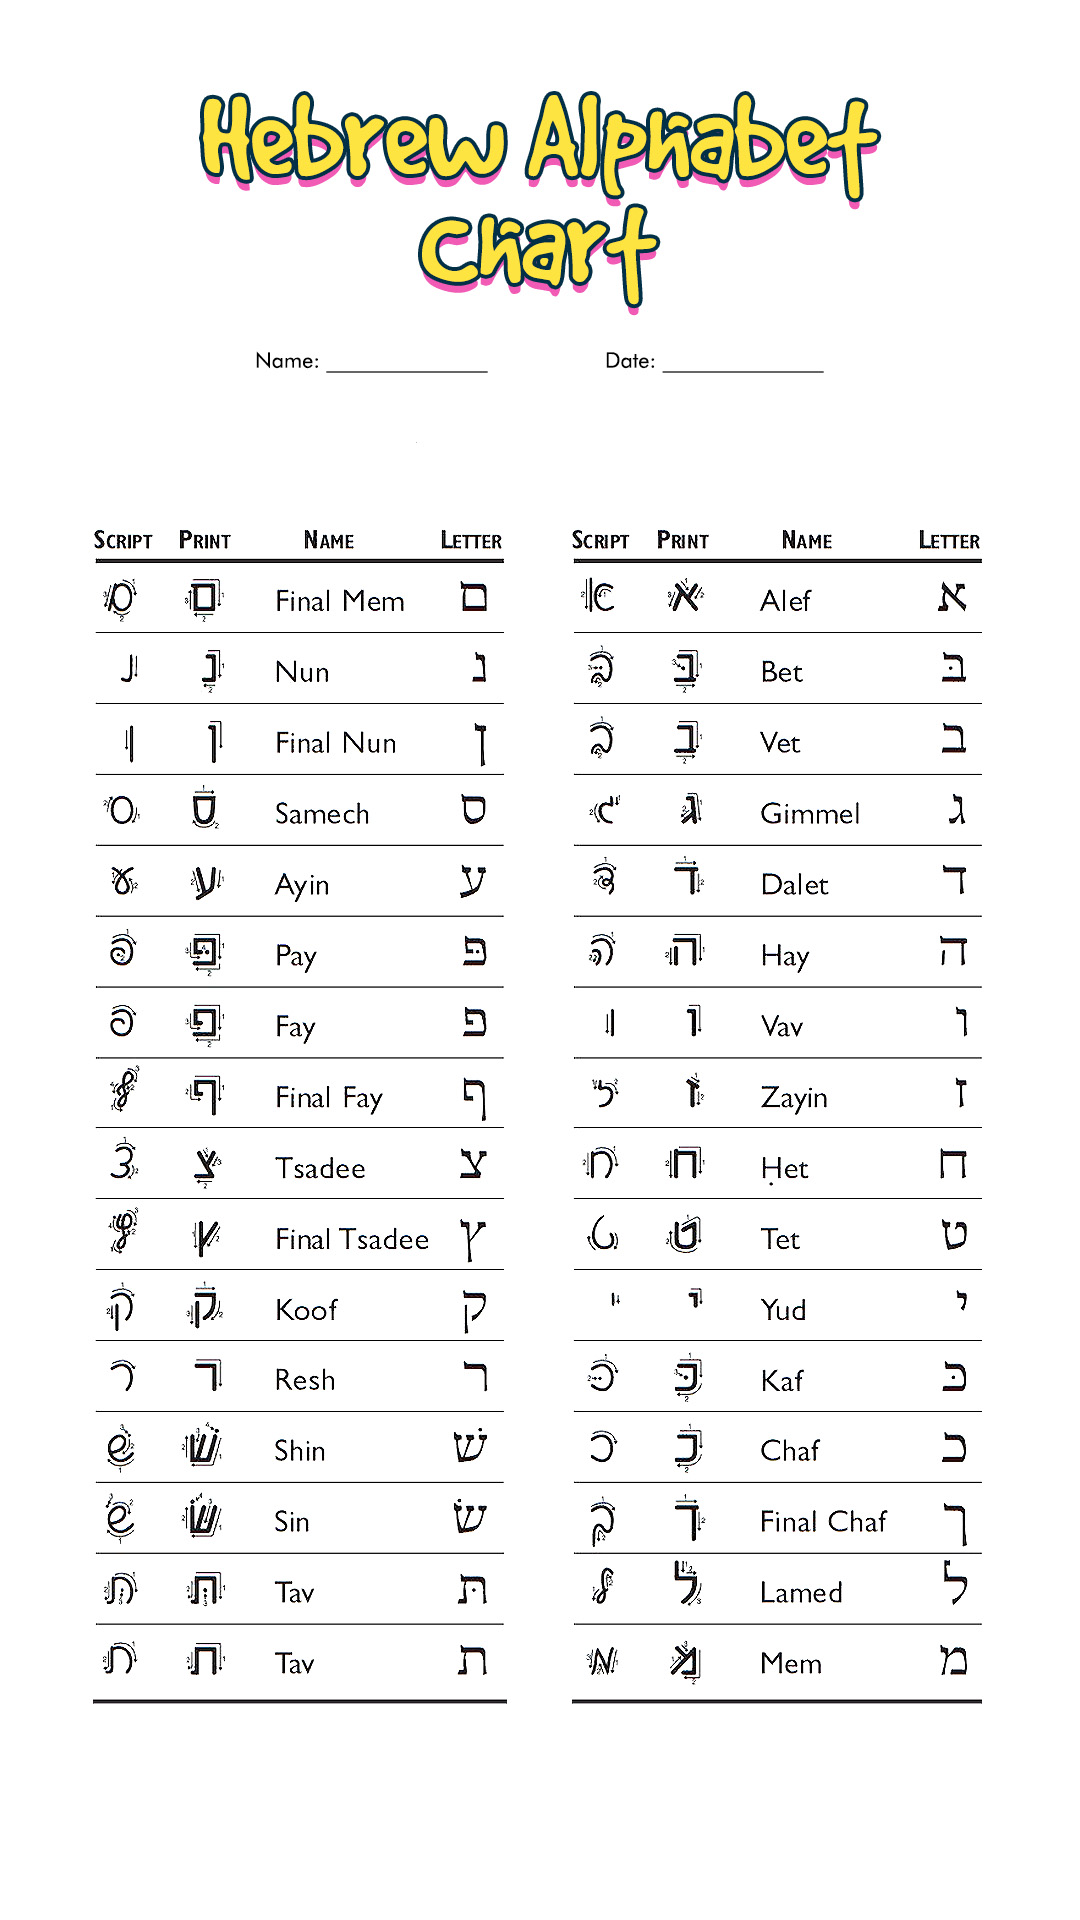 Hebrew Alphabet Chart Image